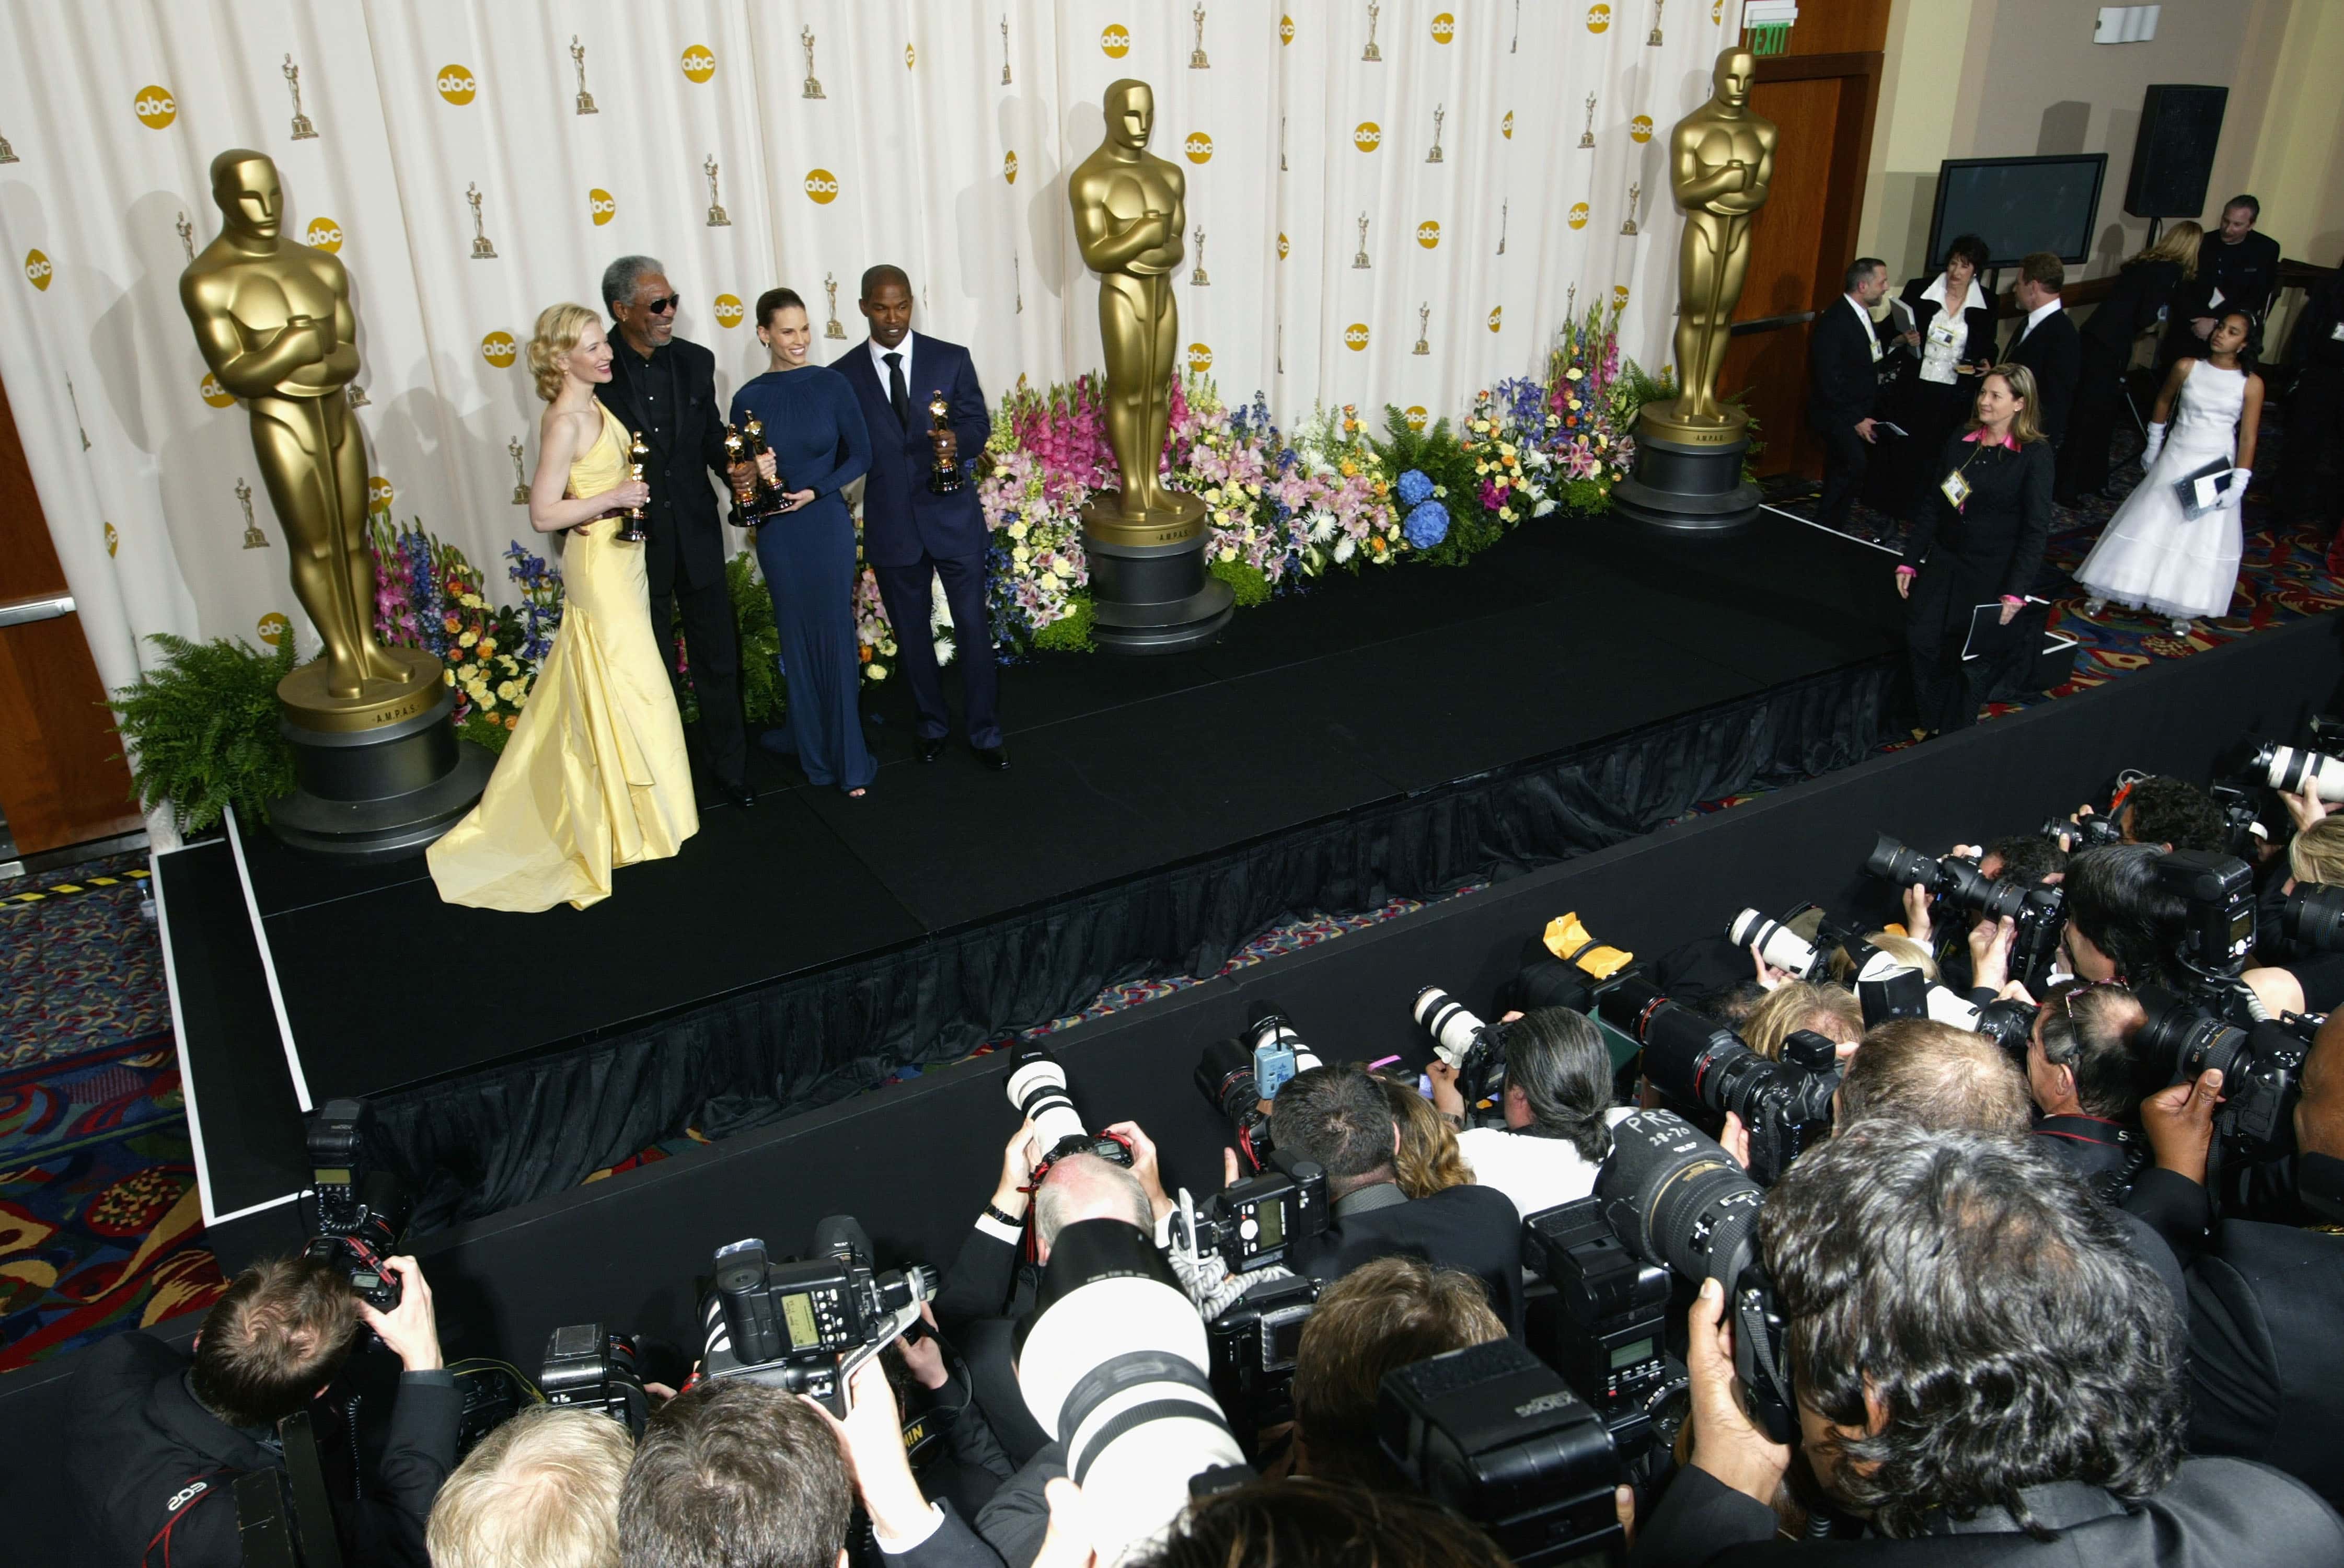 The 77th Annual Academy Awards - Photo Room